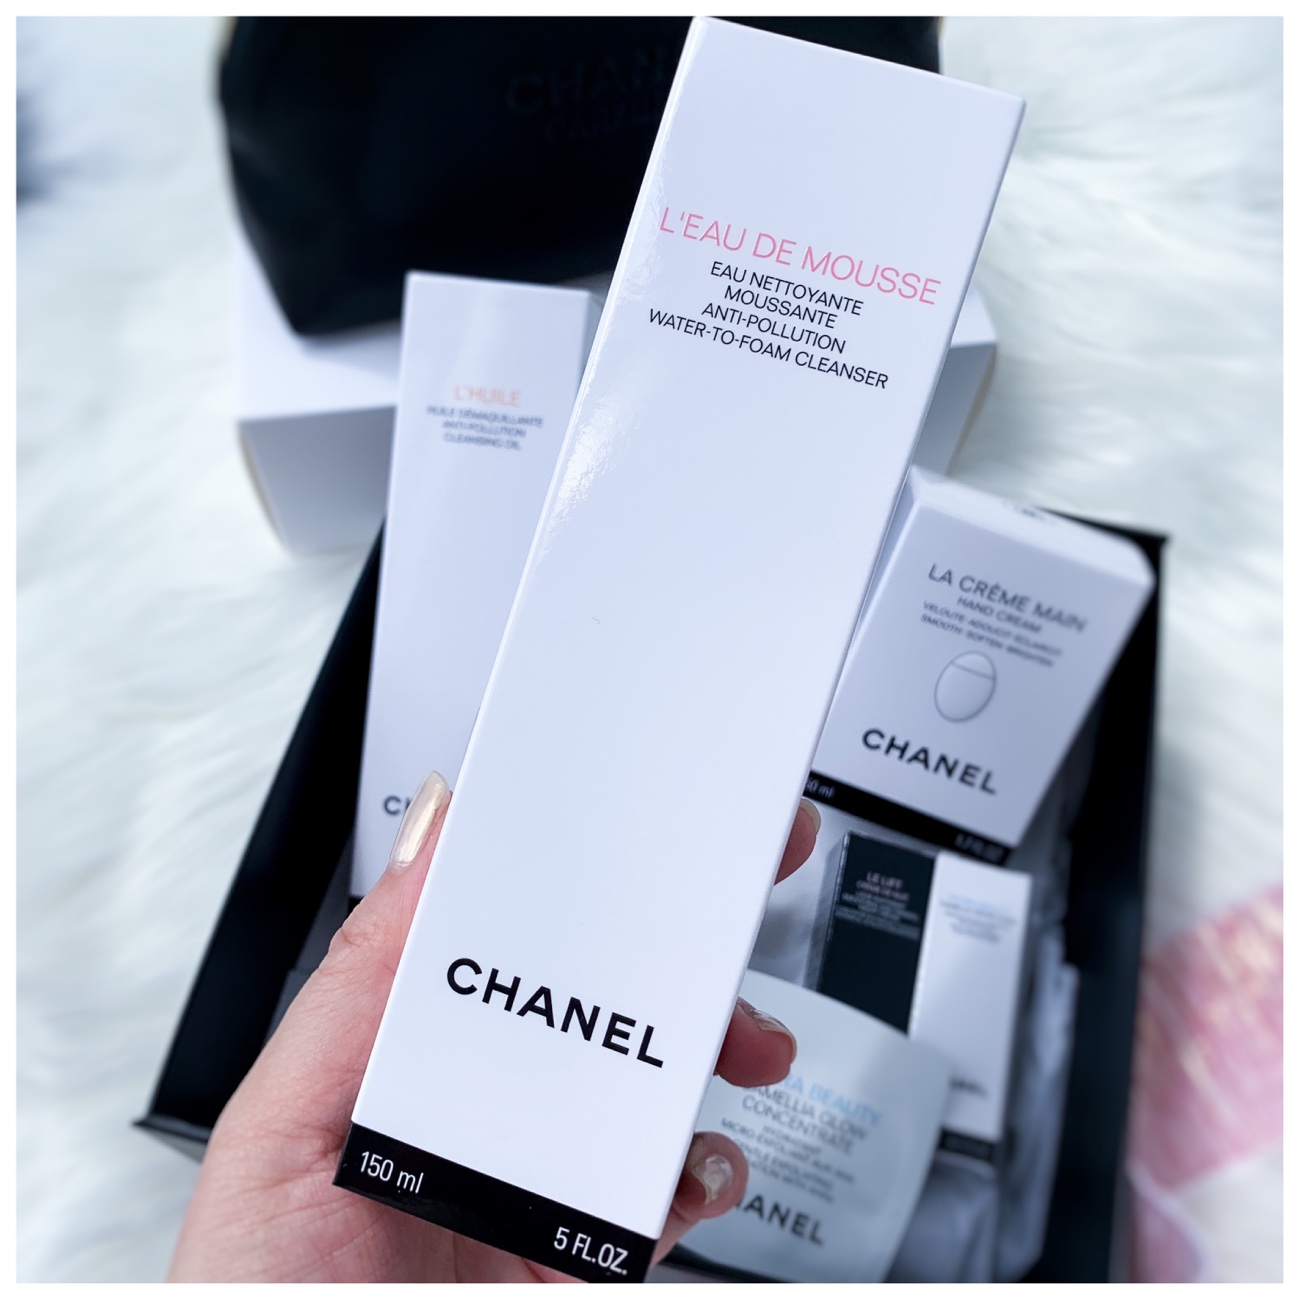 Chanel L'Eau De Mousse Water-to-foam Cleanser